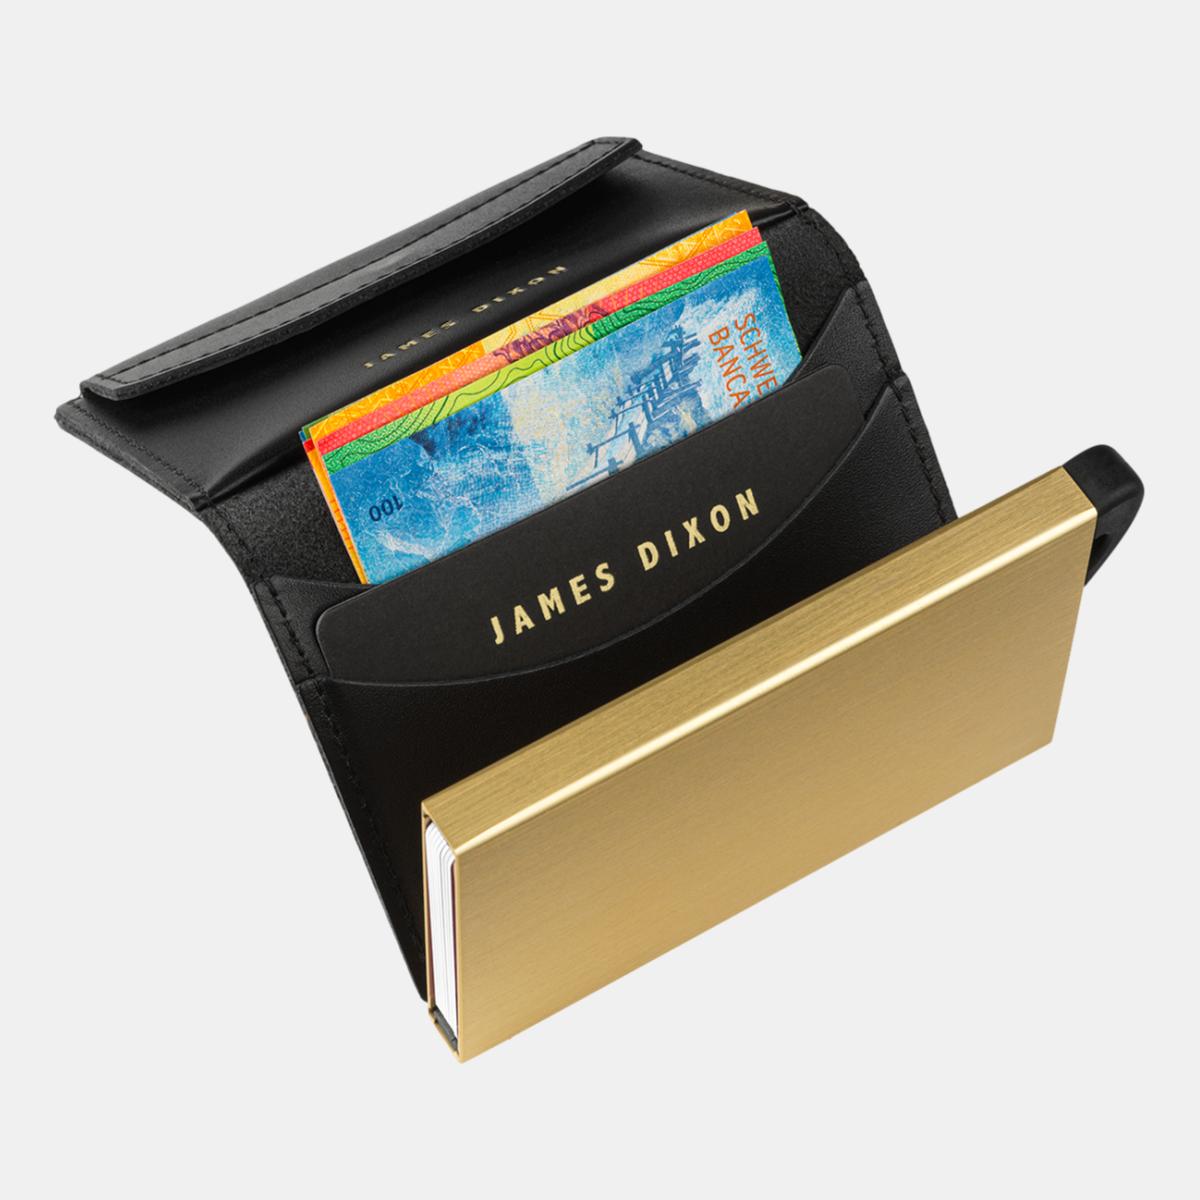 jd0122 james dixon puro one black gold coin pocket wallet notes